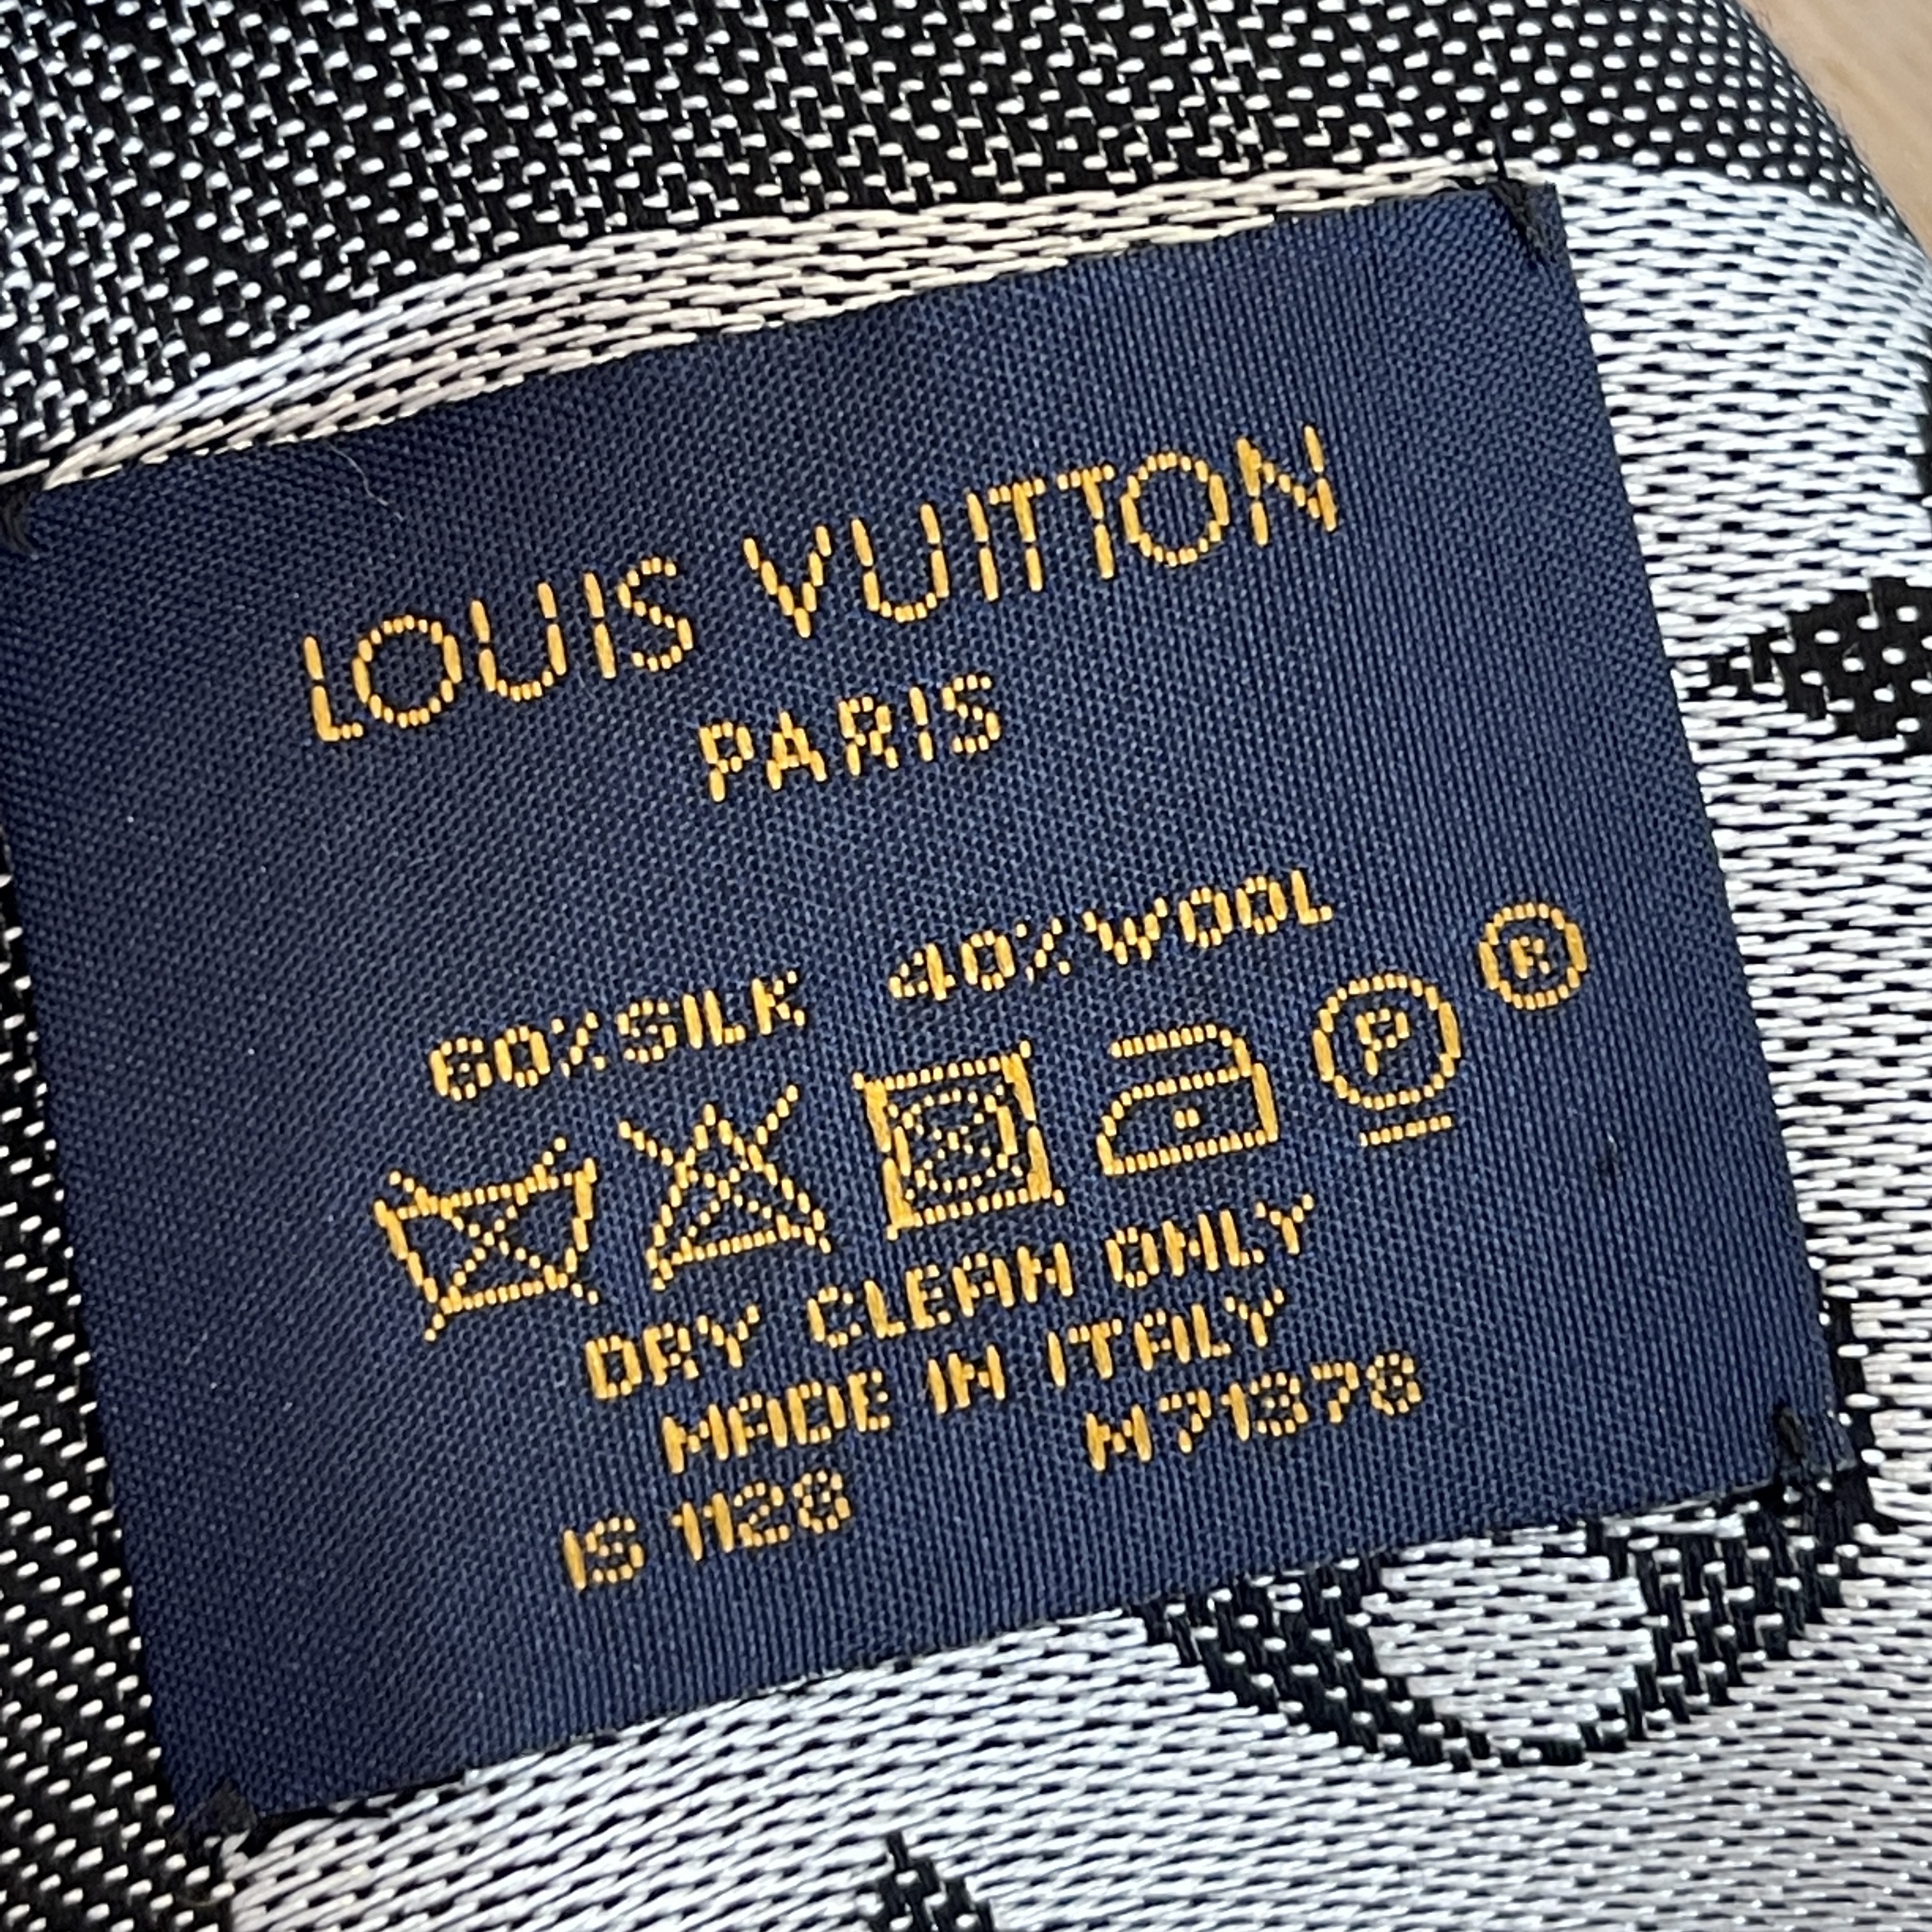 Louis Vuitton Classic Monogram Shawl